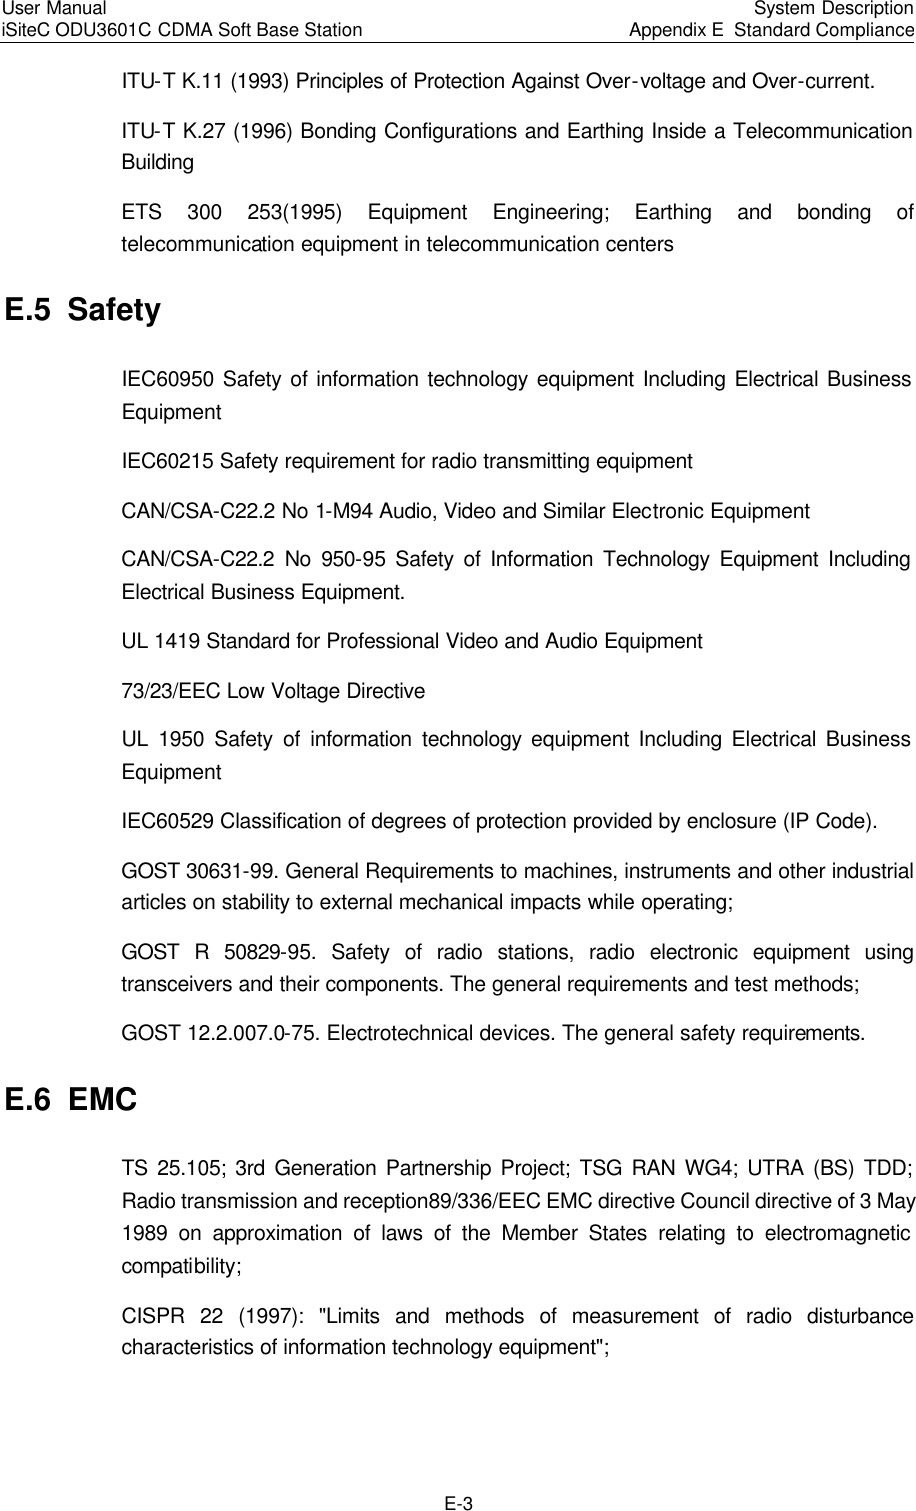 Page 69 of Huawei Technologies ODU3601C-800 CDMA Base Station User Manual 2